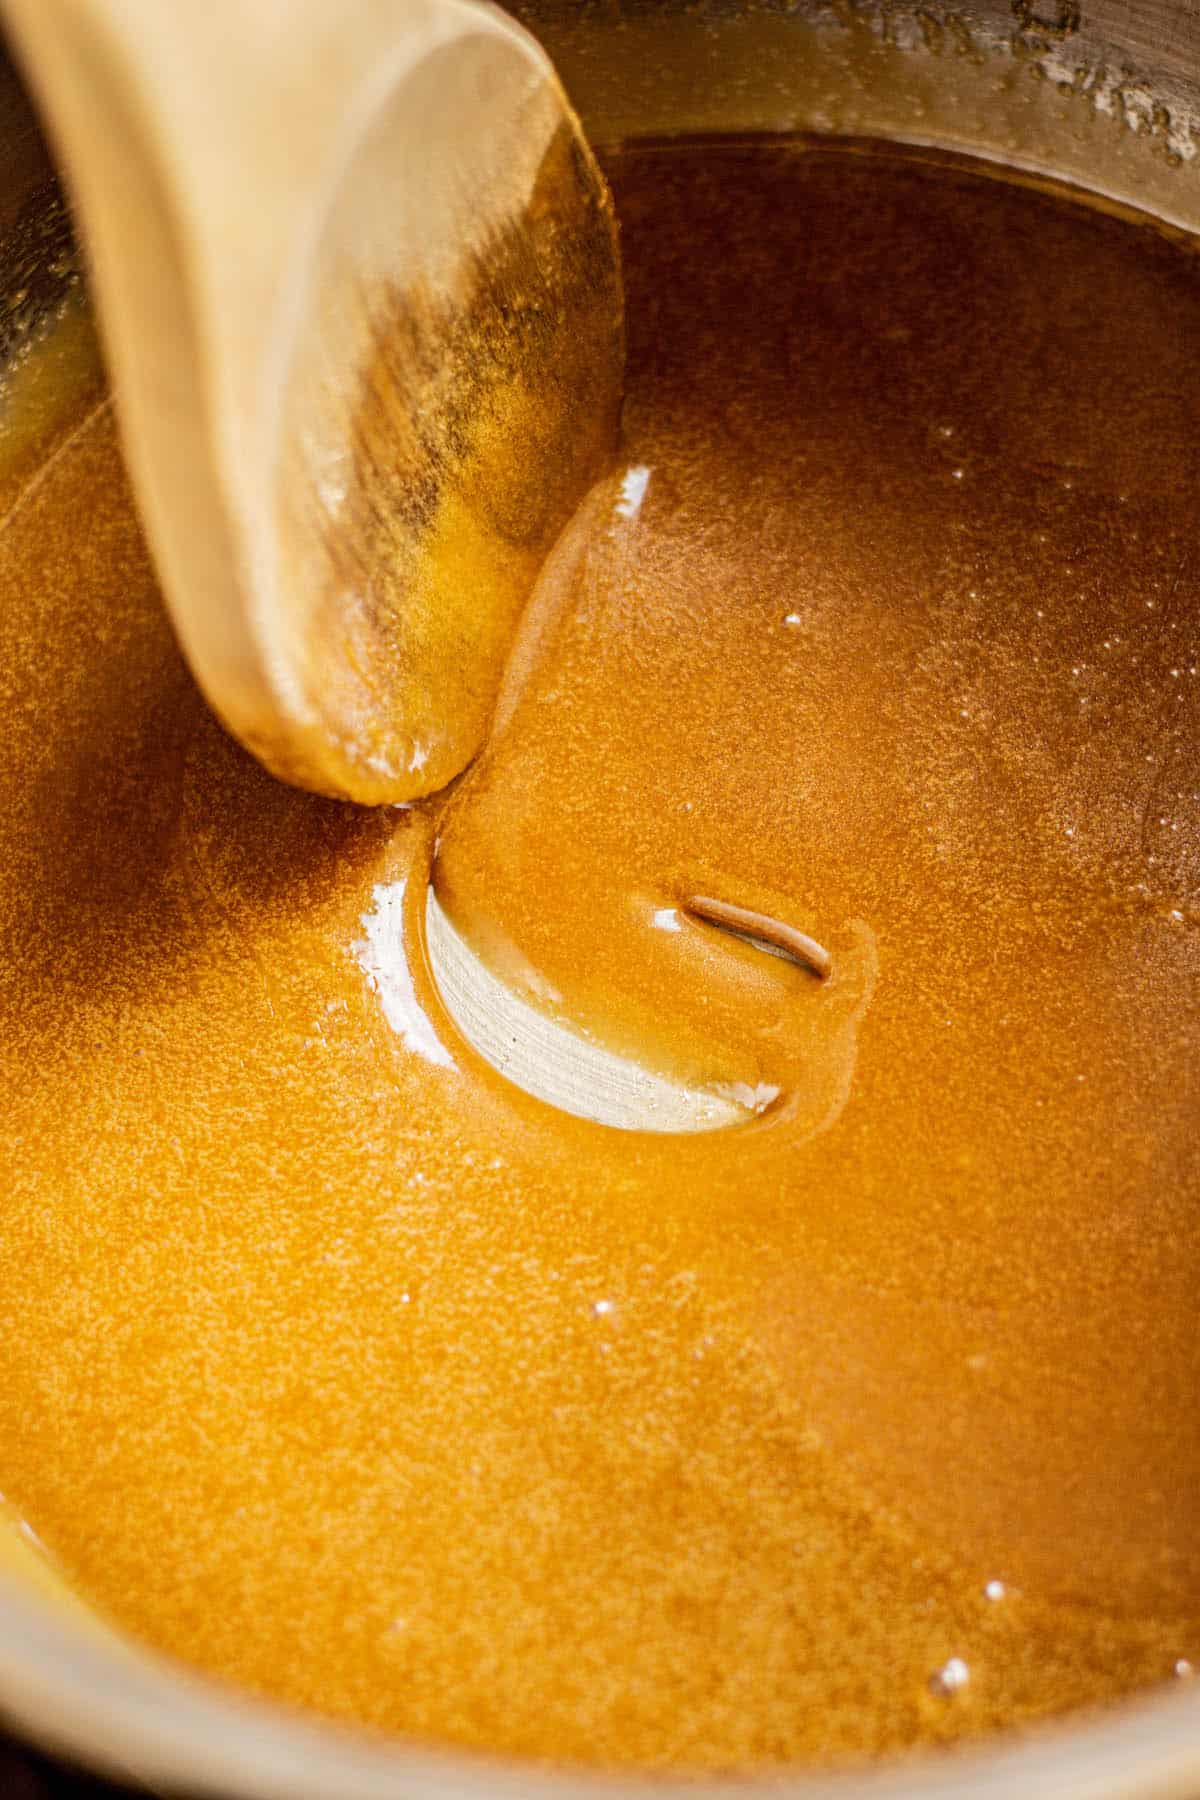 a spoon stirring brown sugar.